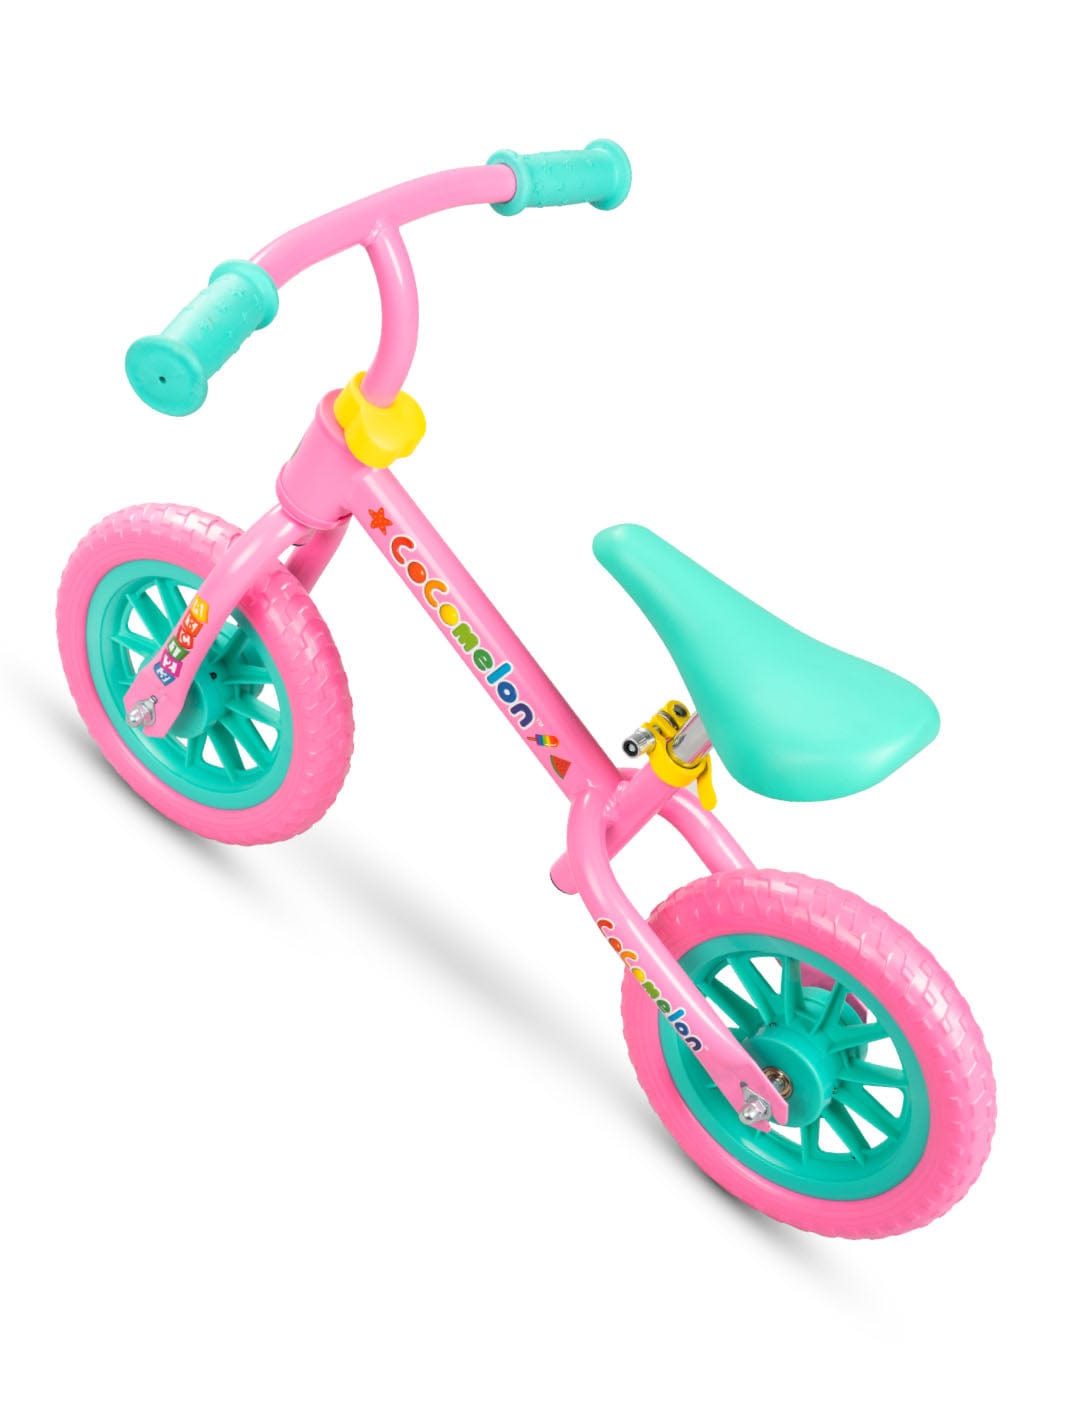 Cocomelon Beginner Balance Bike & Helmet - Pink - Madd Gear Global | Est 2002